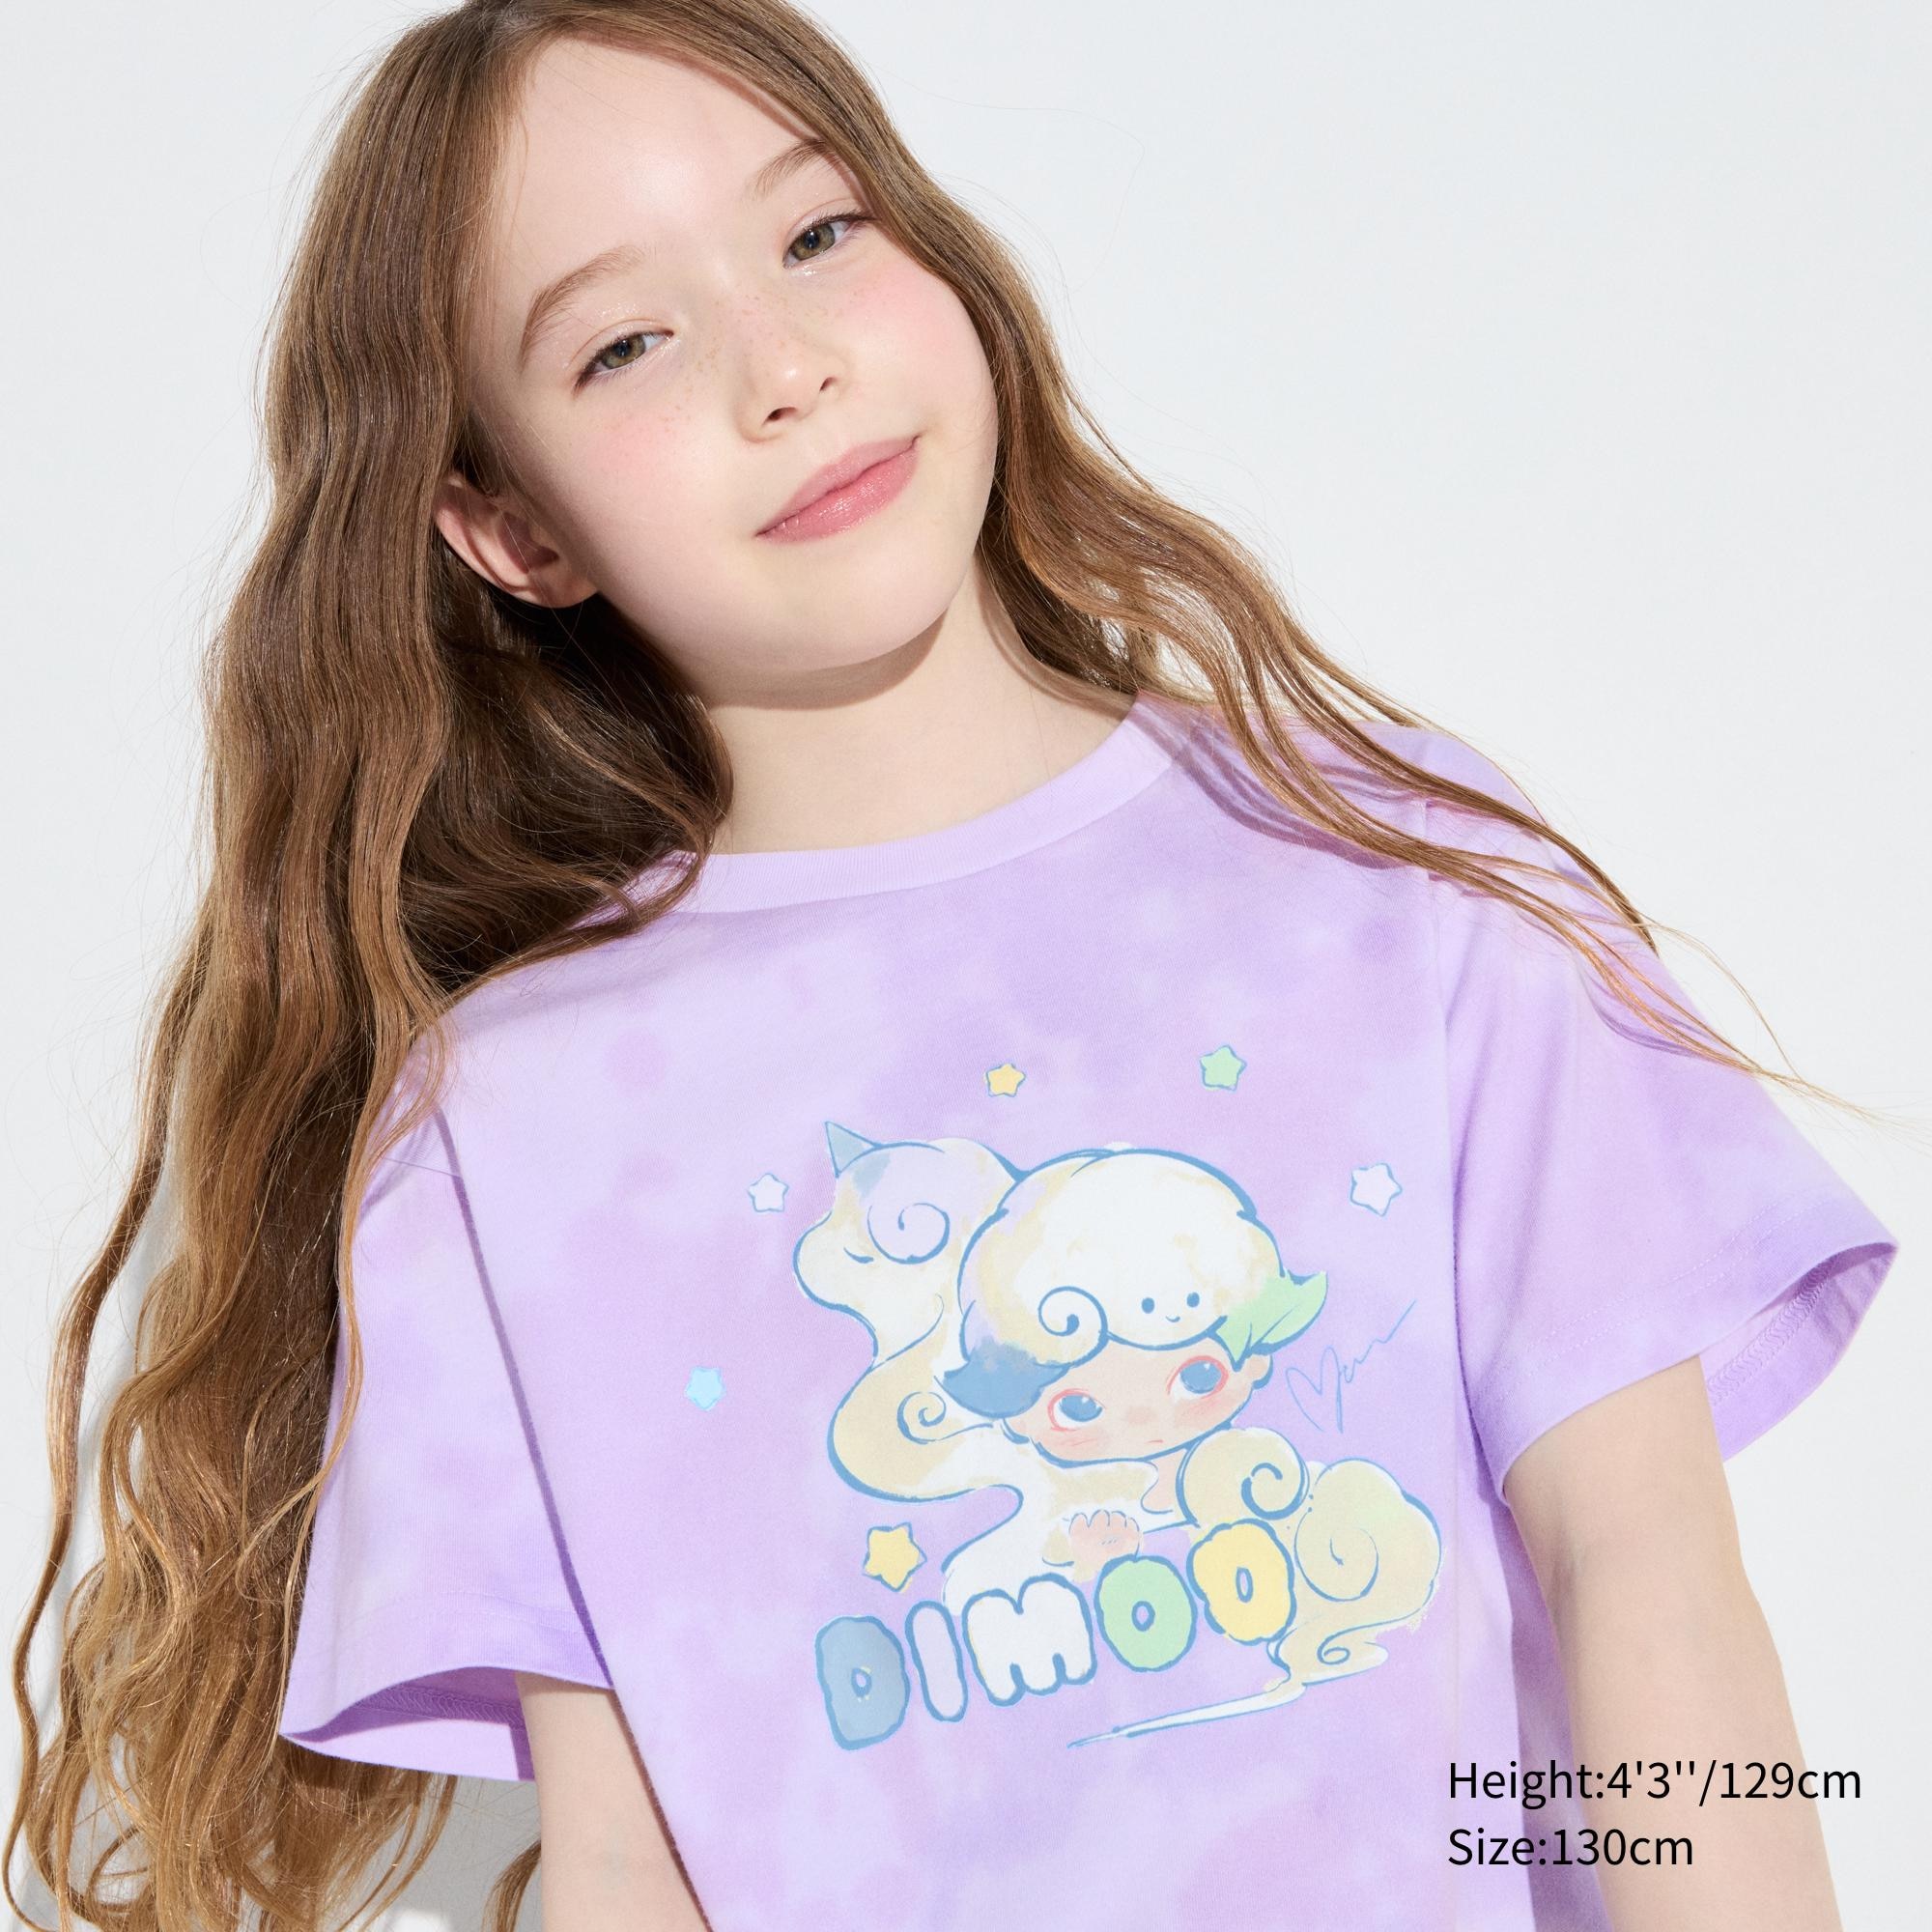 KIDS POP MART DIMOO WORLD UT (Short Sleeve Graphic T-Shirt)